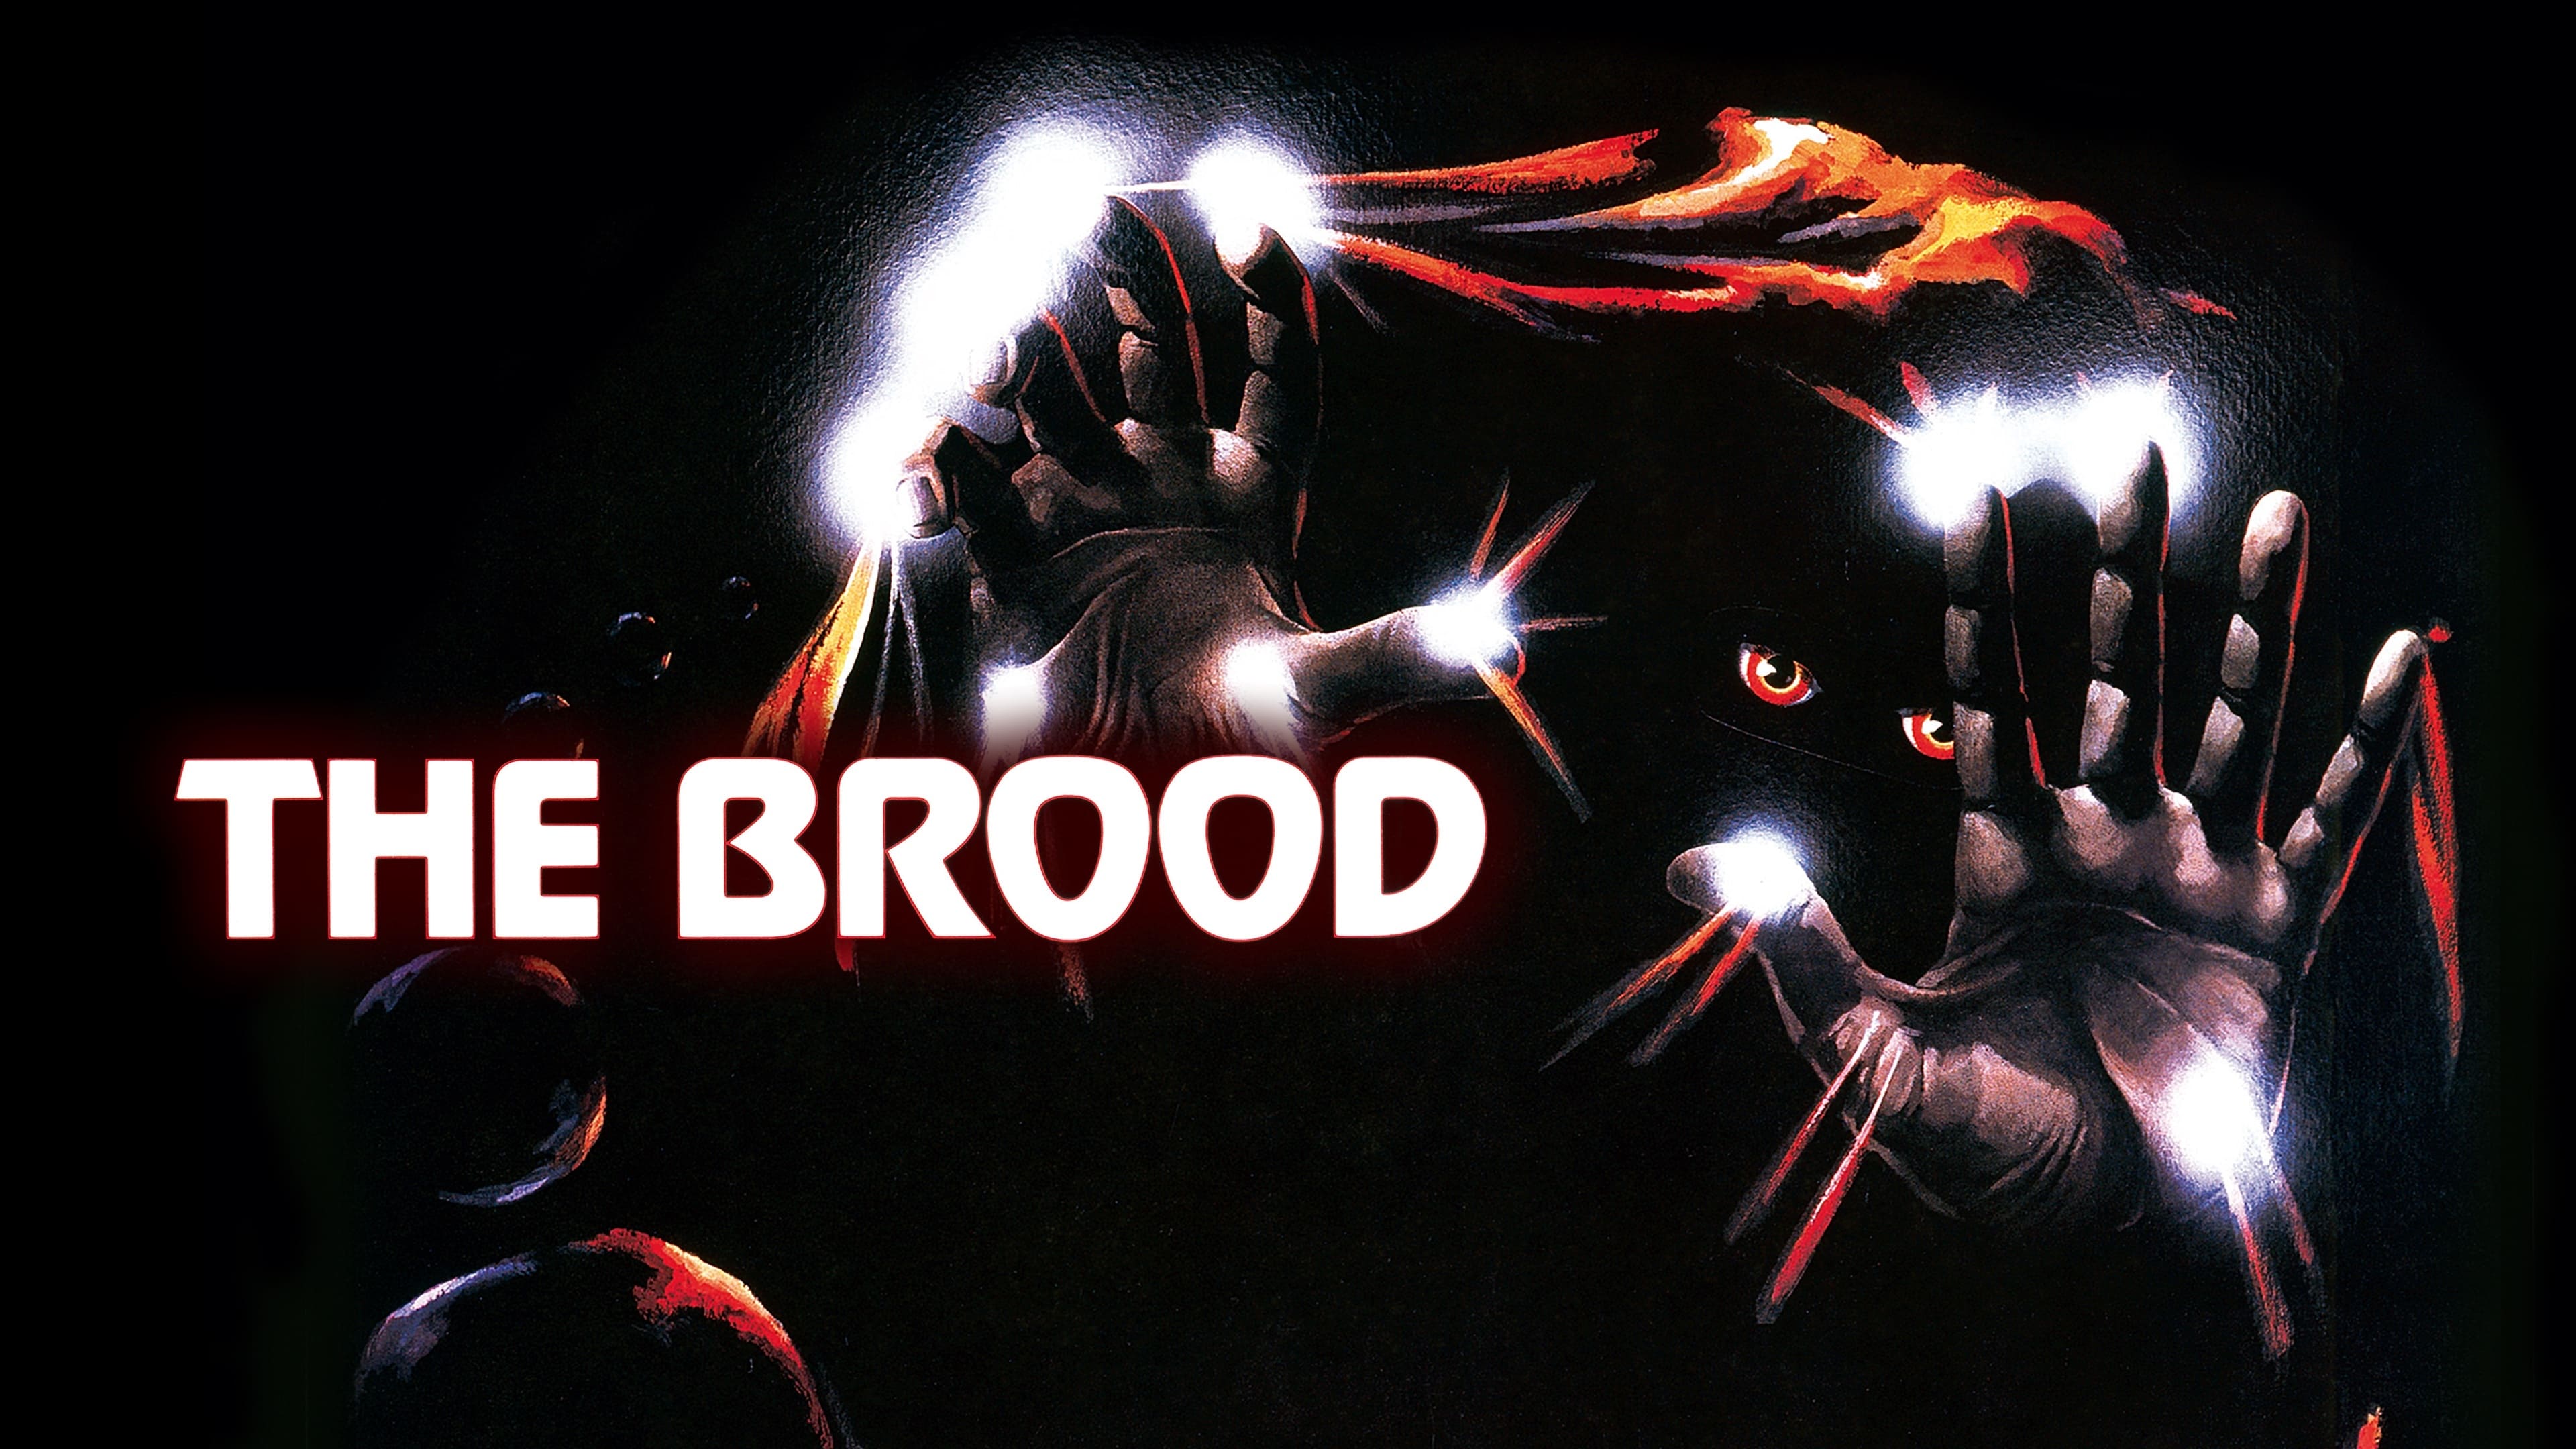 The Brood (1979)